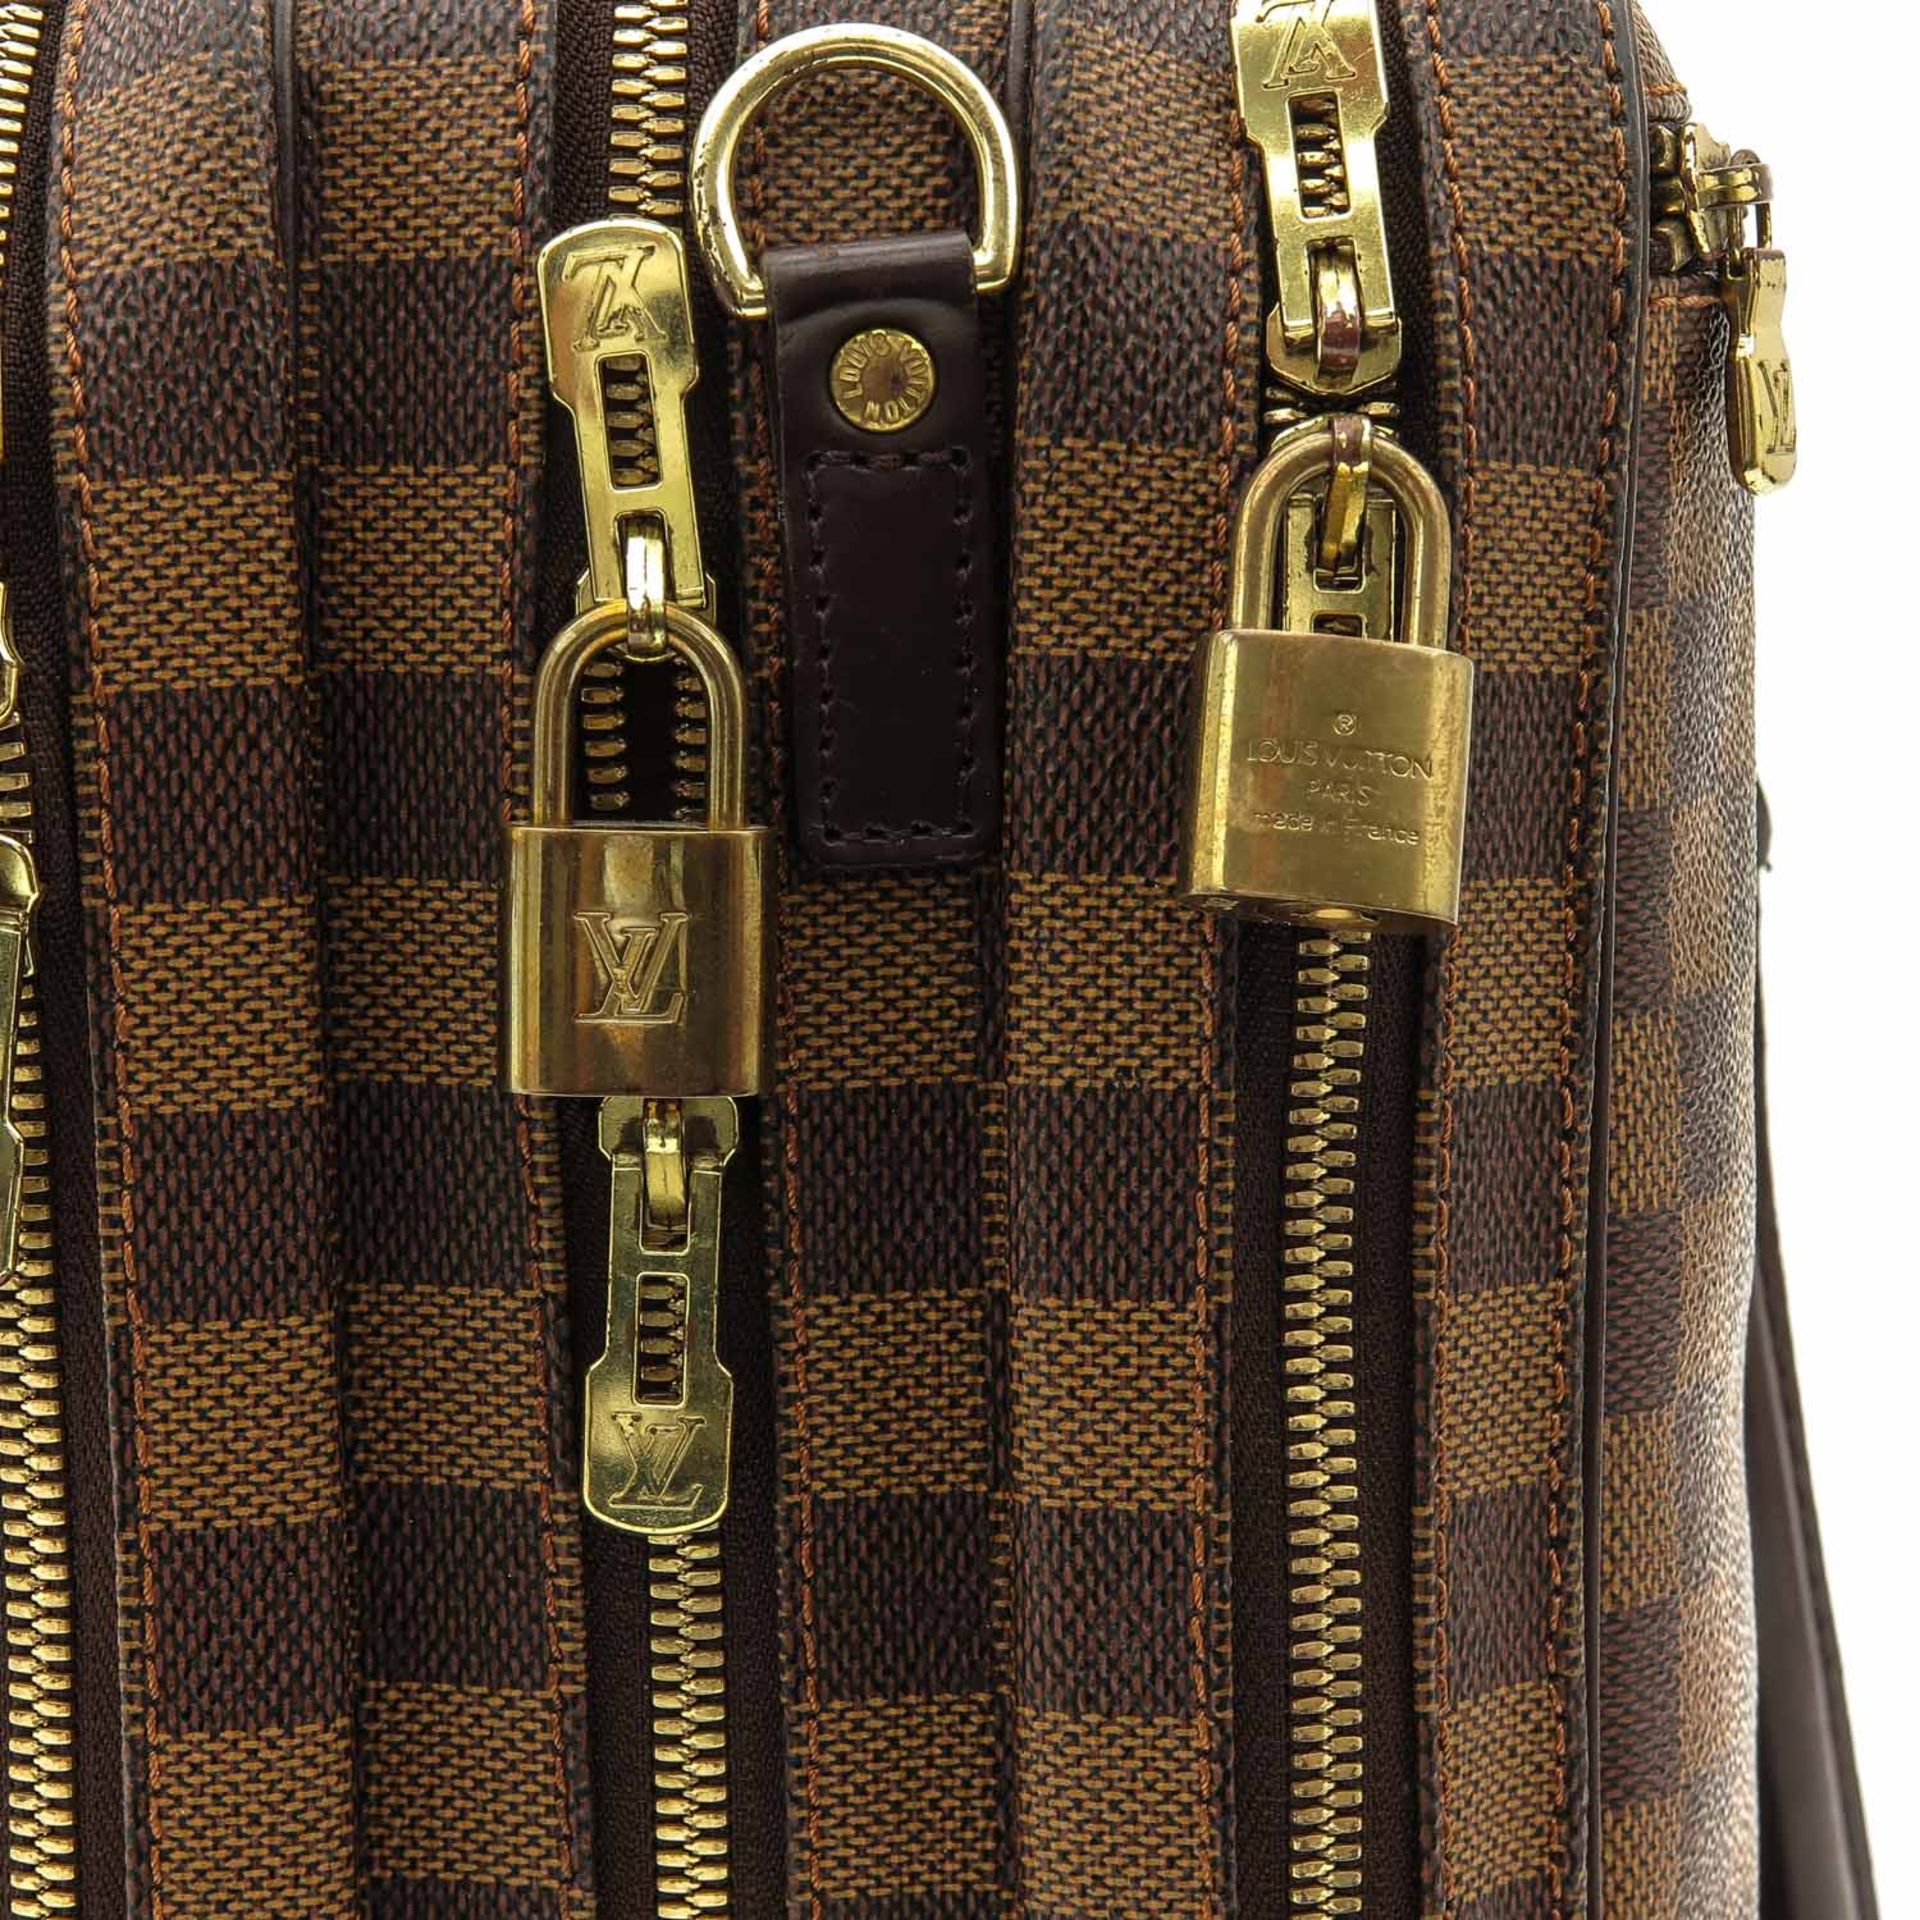 A Custom Made Louis Vuitton Travel Bag - Image 8 of 8